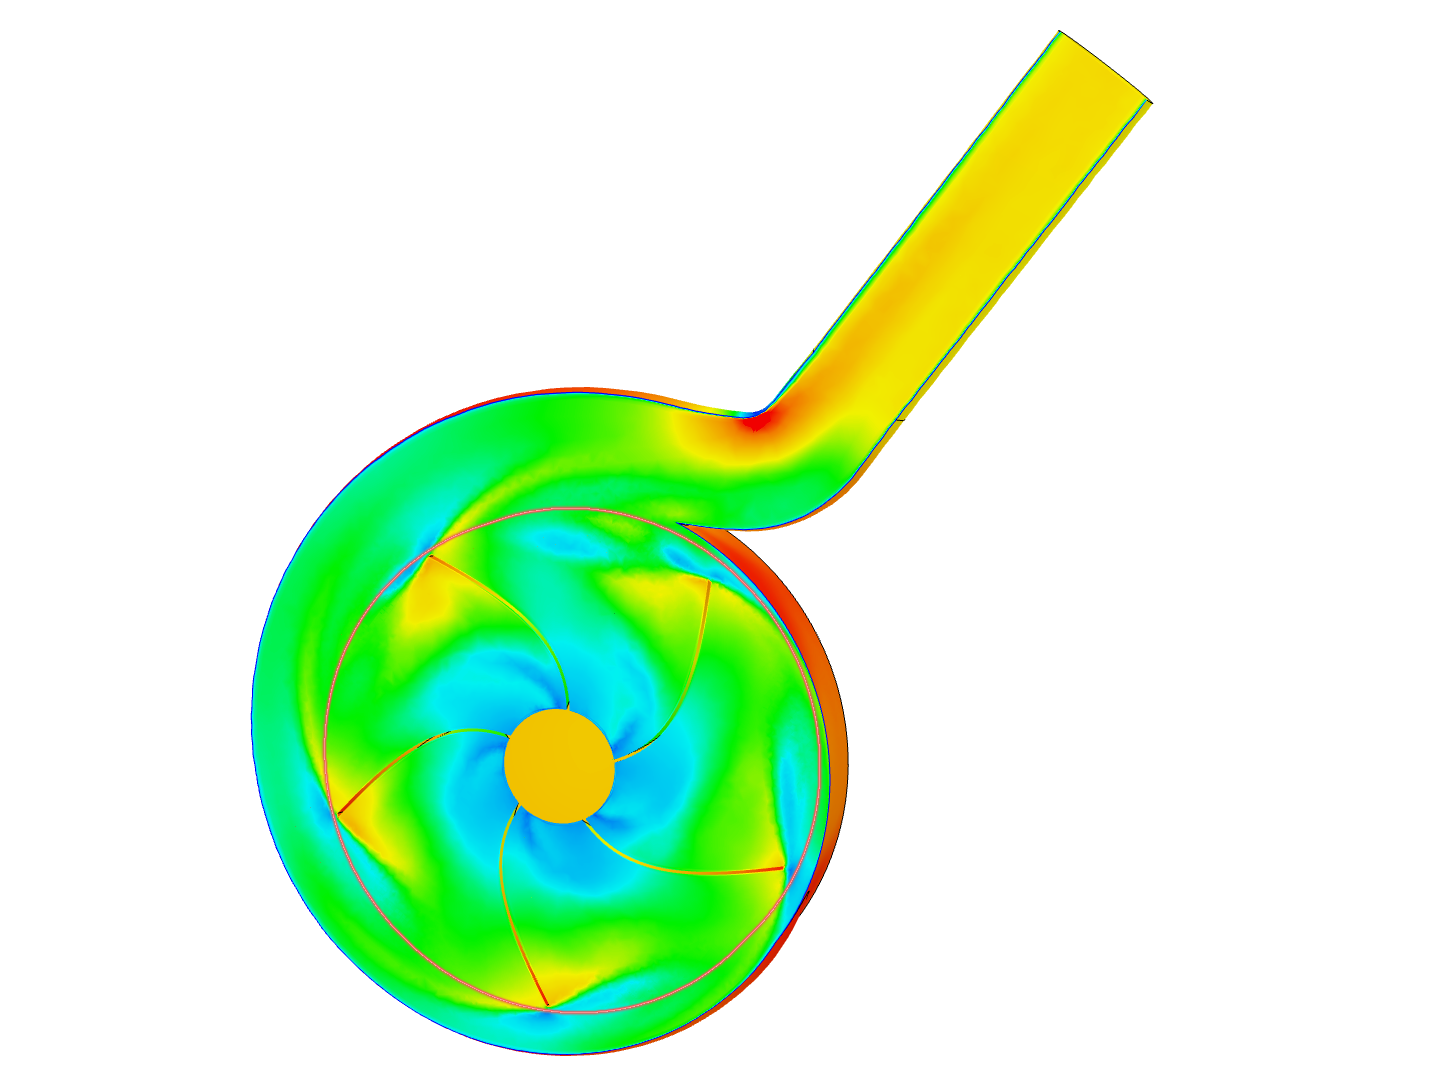 cfd centrifugal pump simulation image